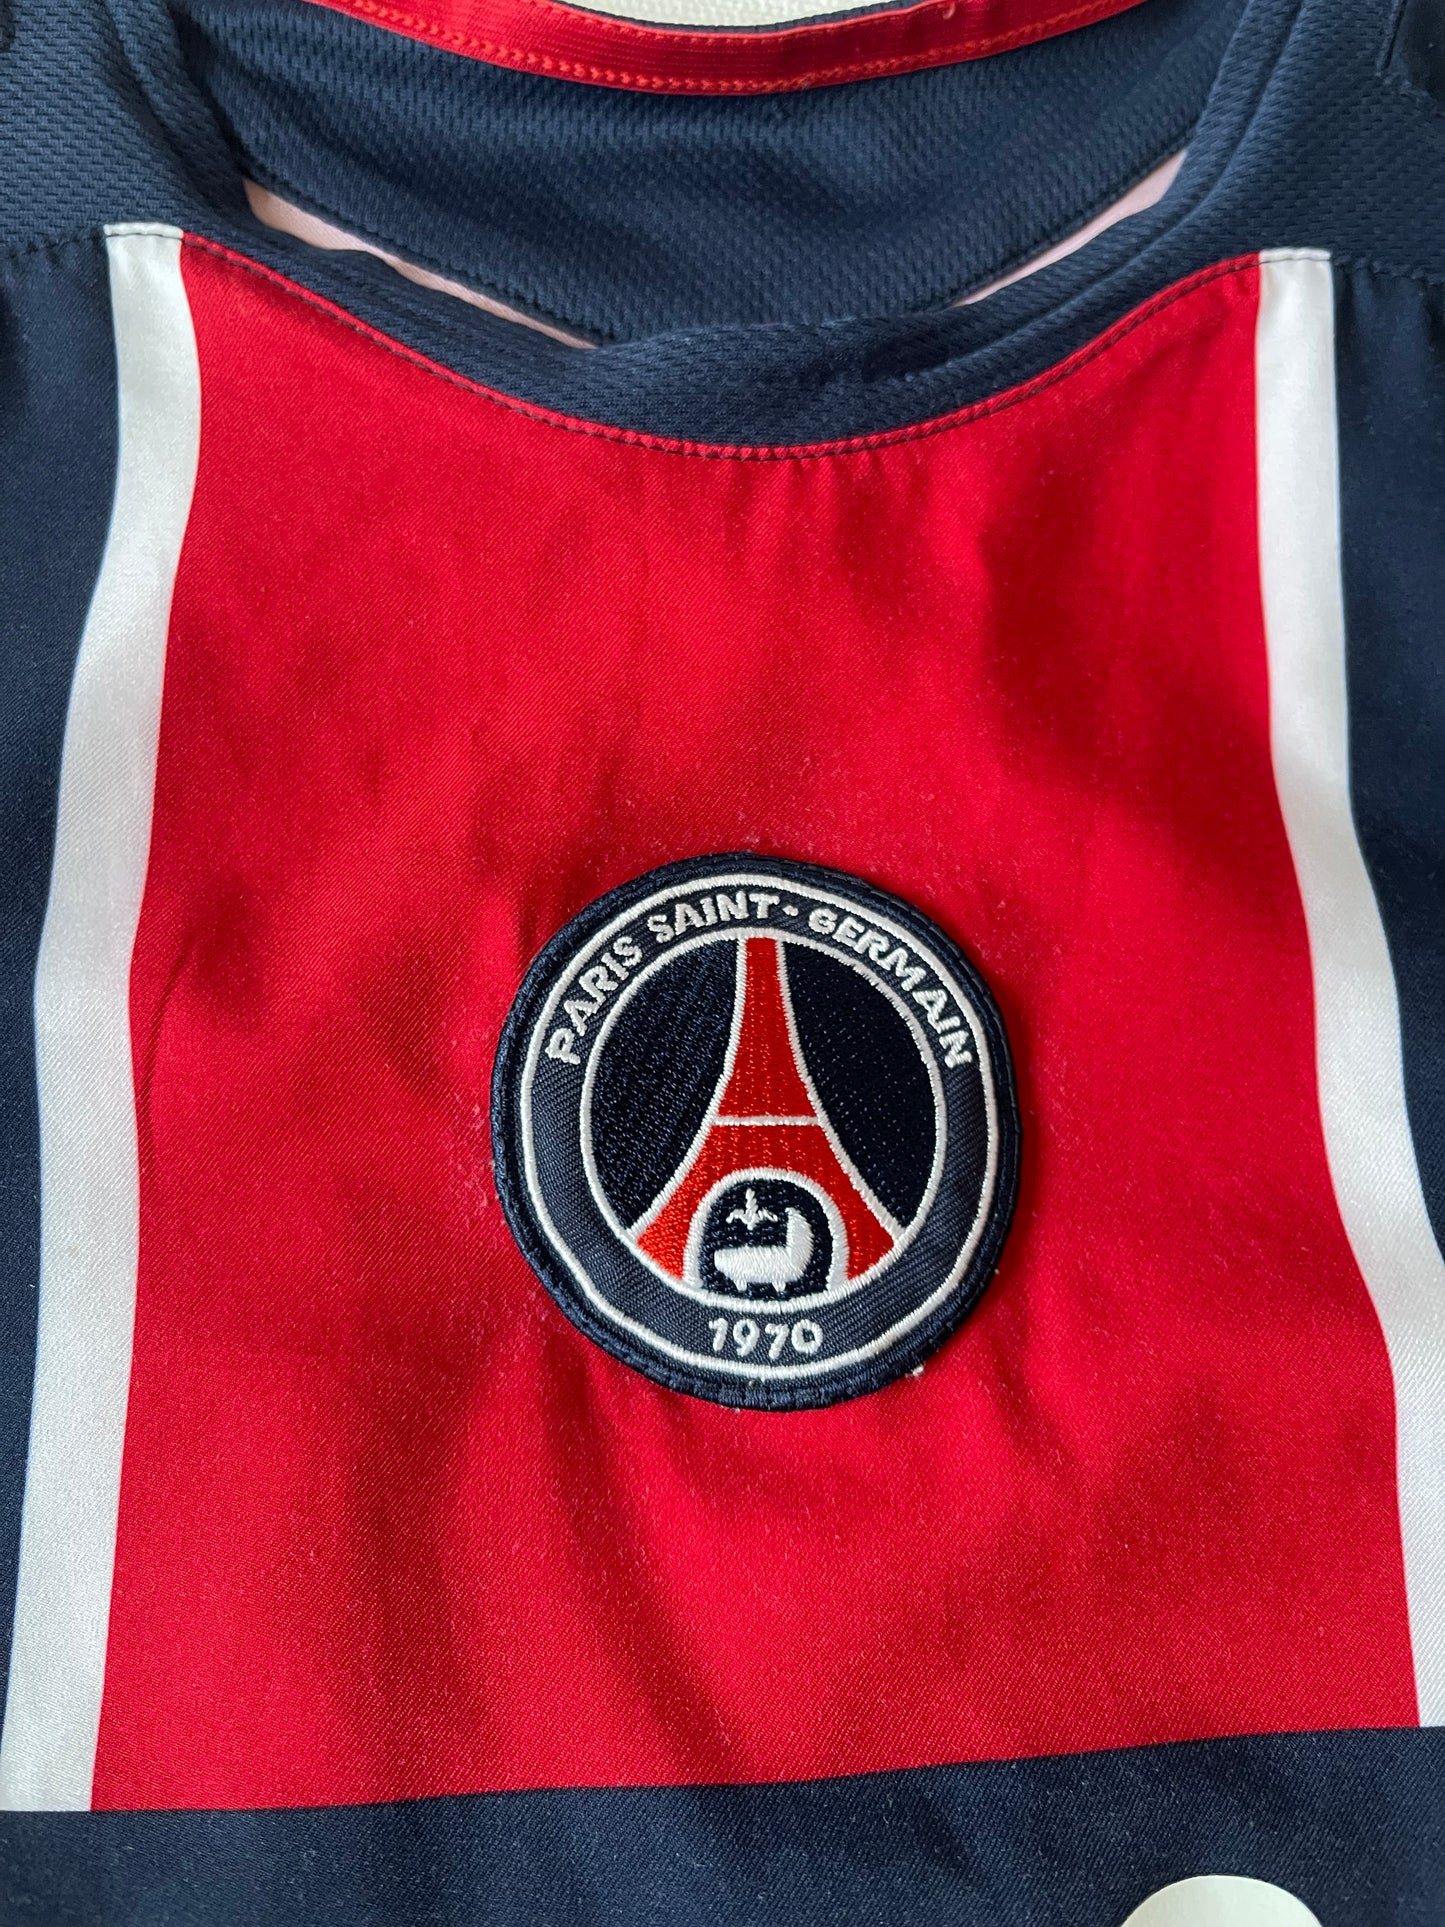 PSG Paris Saint Germain Nike Total 90 2005 - 2006 Home Football Shirt Red Blue Thomson Size L